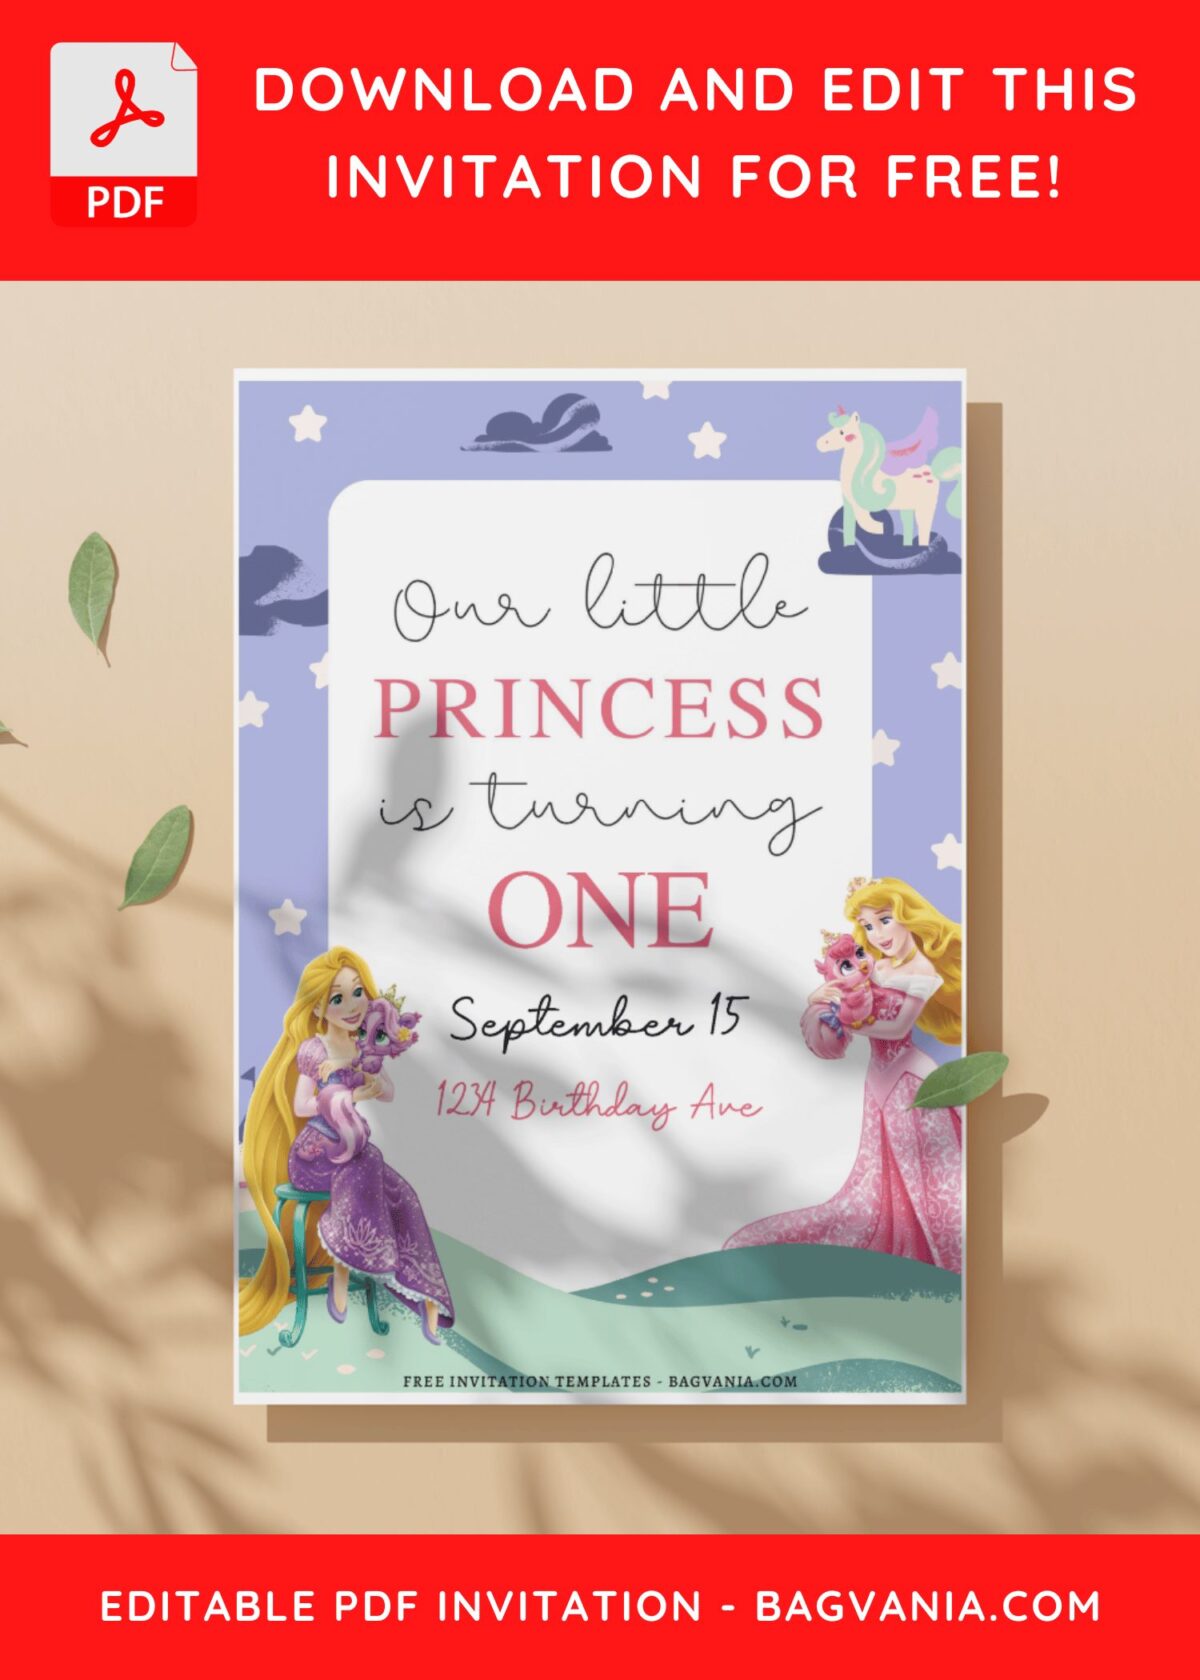 (Free Editable PDF) Magical Disney Princess Birthday Invitation Templates I